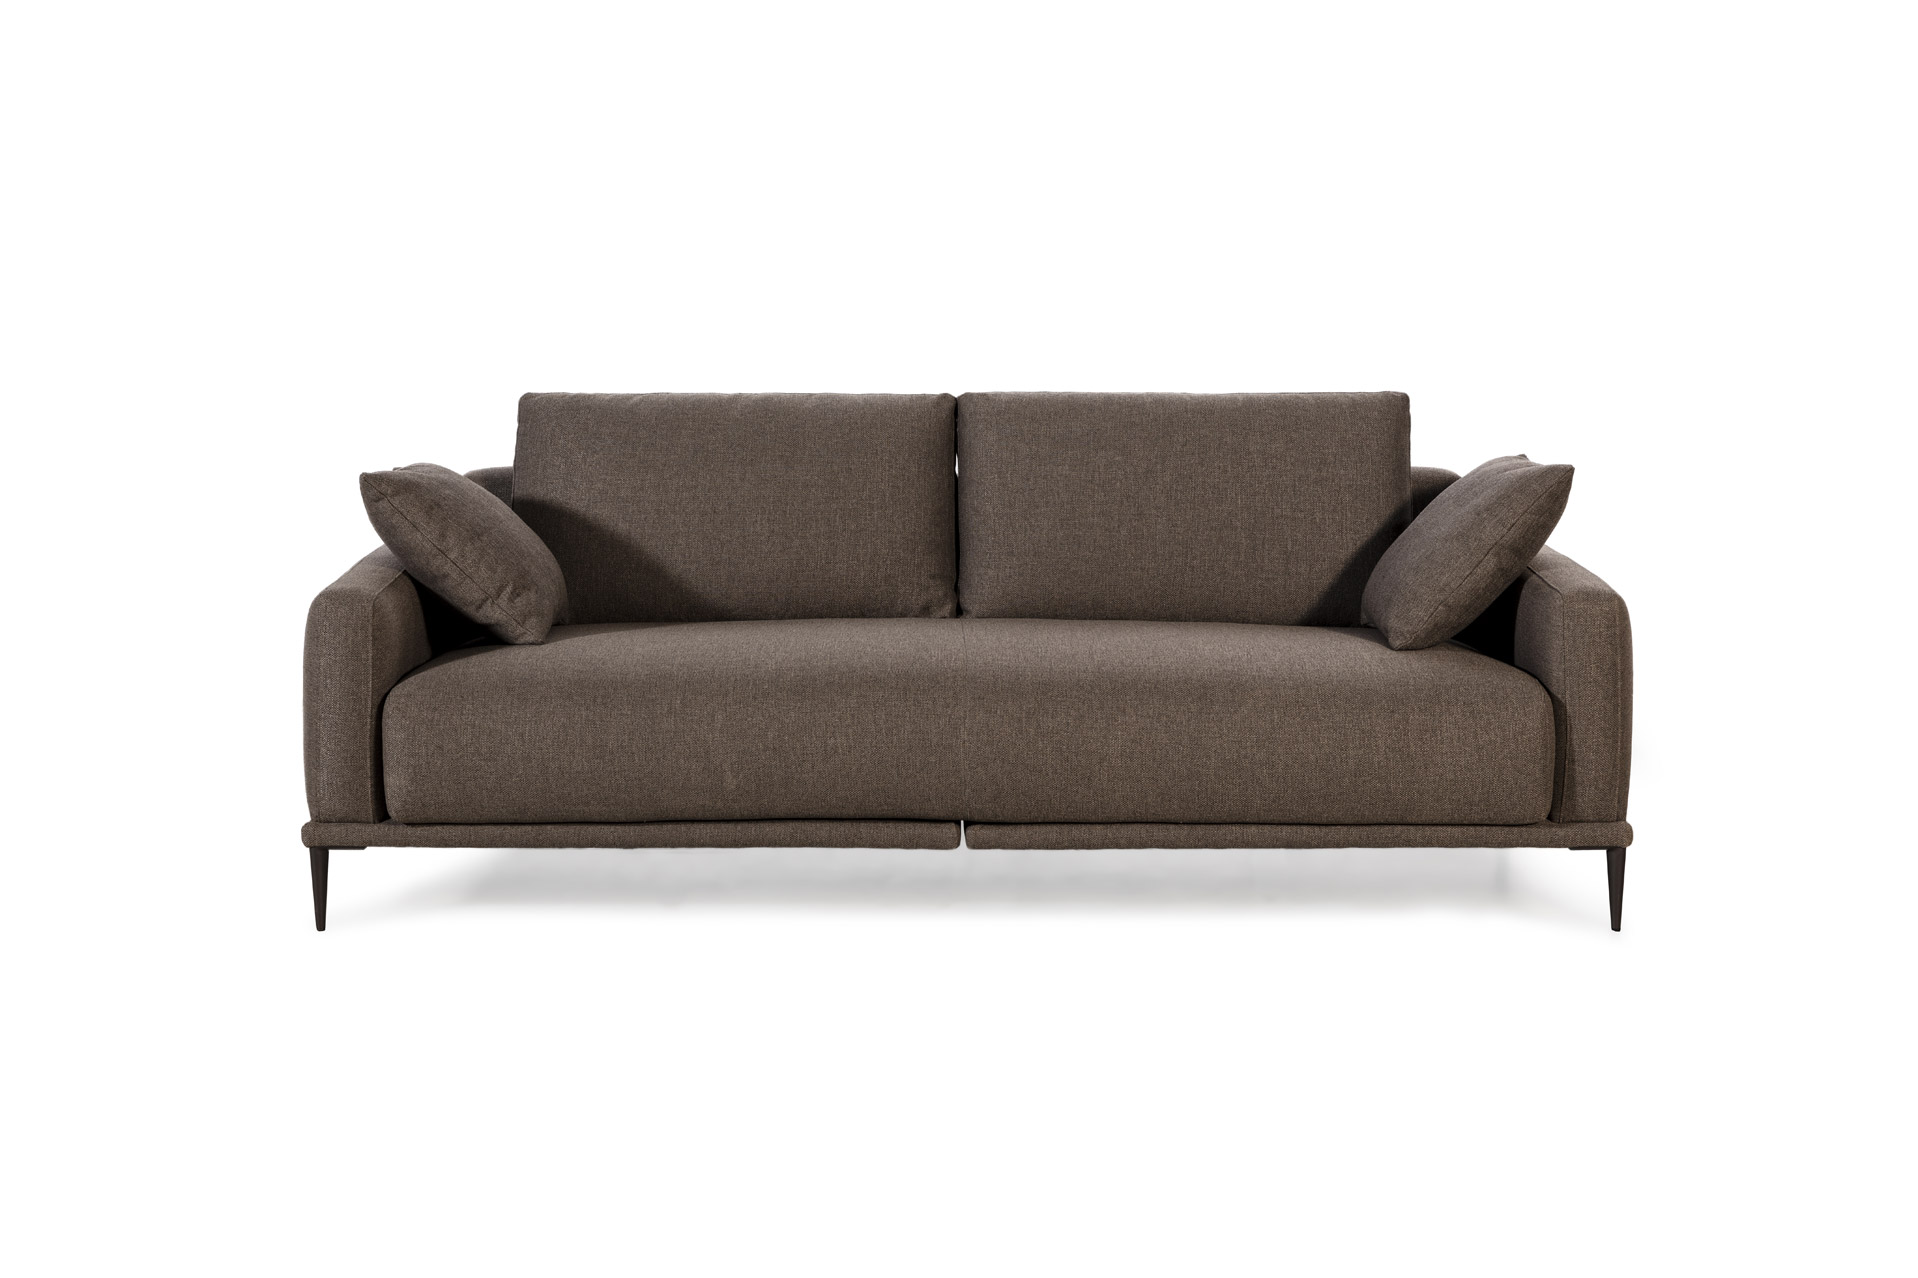 Alfil sofa